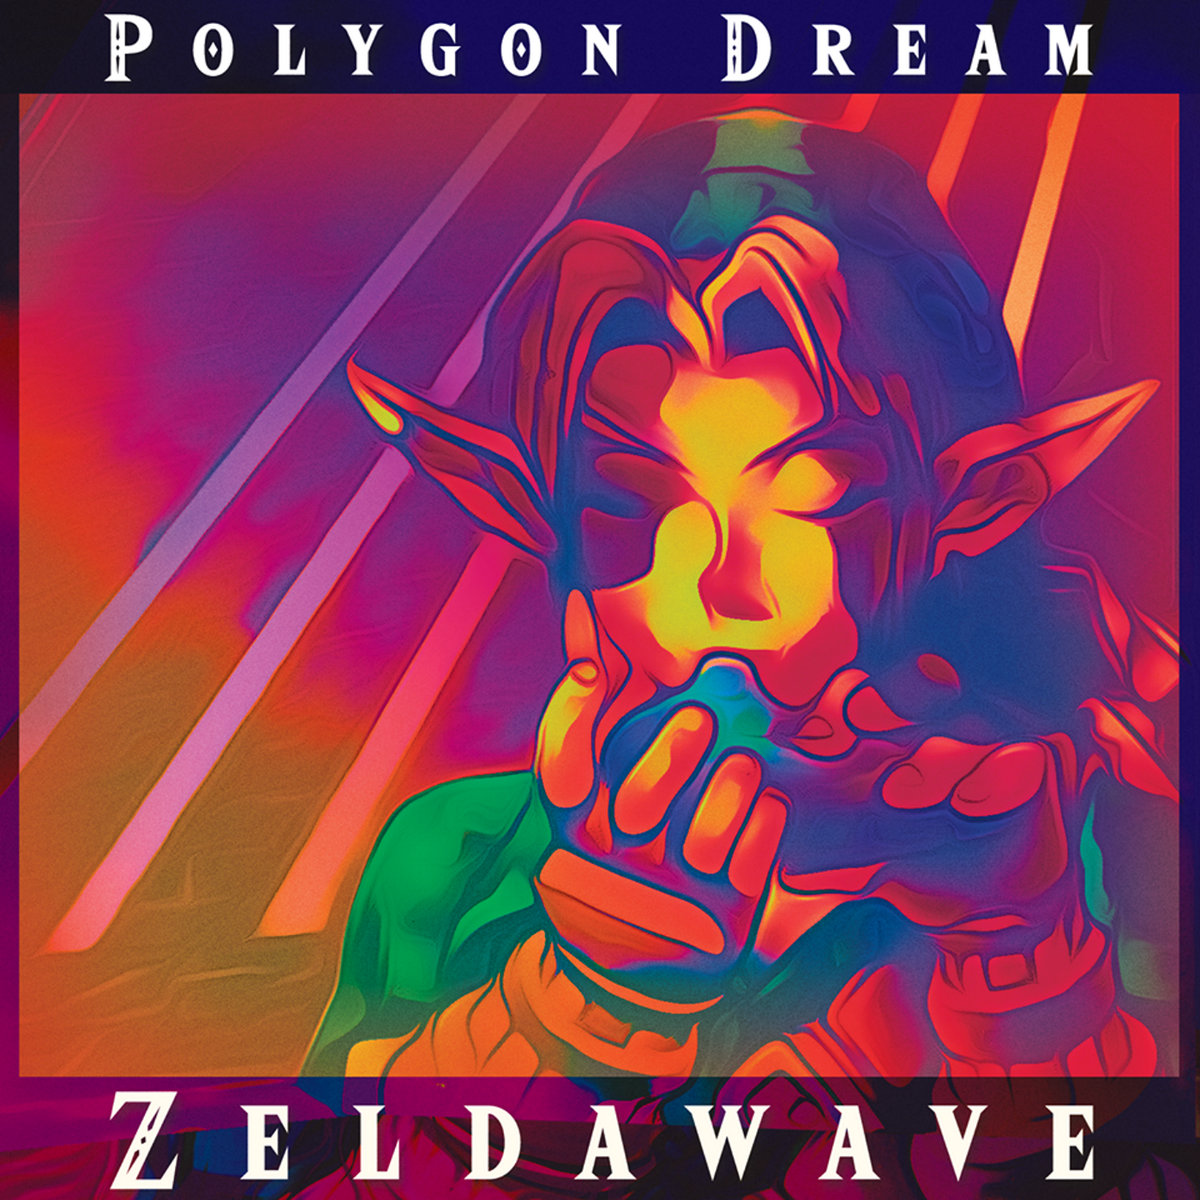 Zeldawave // 近藤 浩治 // OOT by Polygon Dream